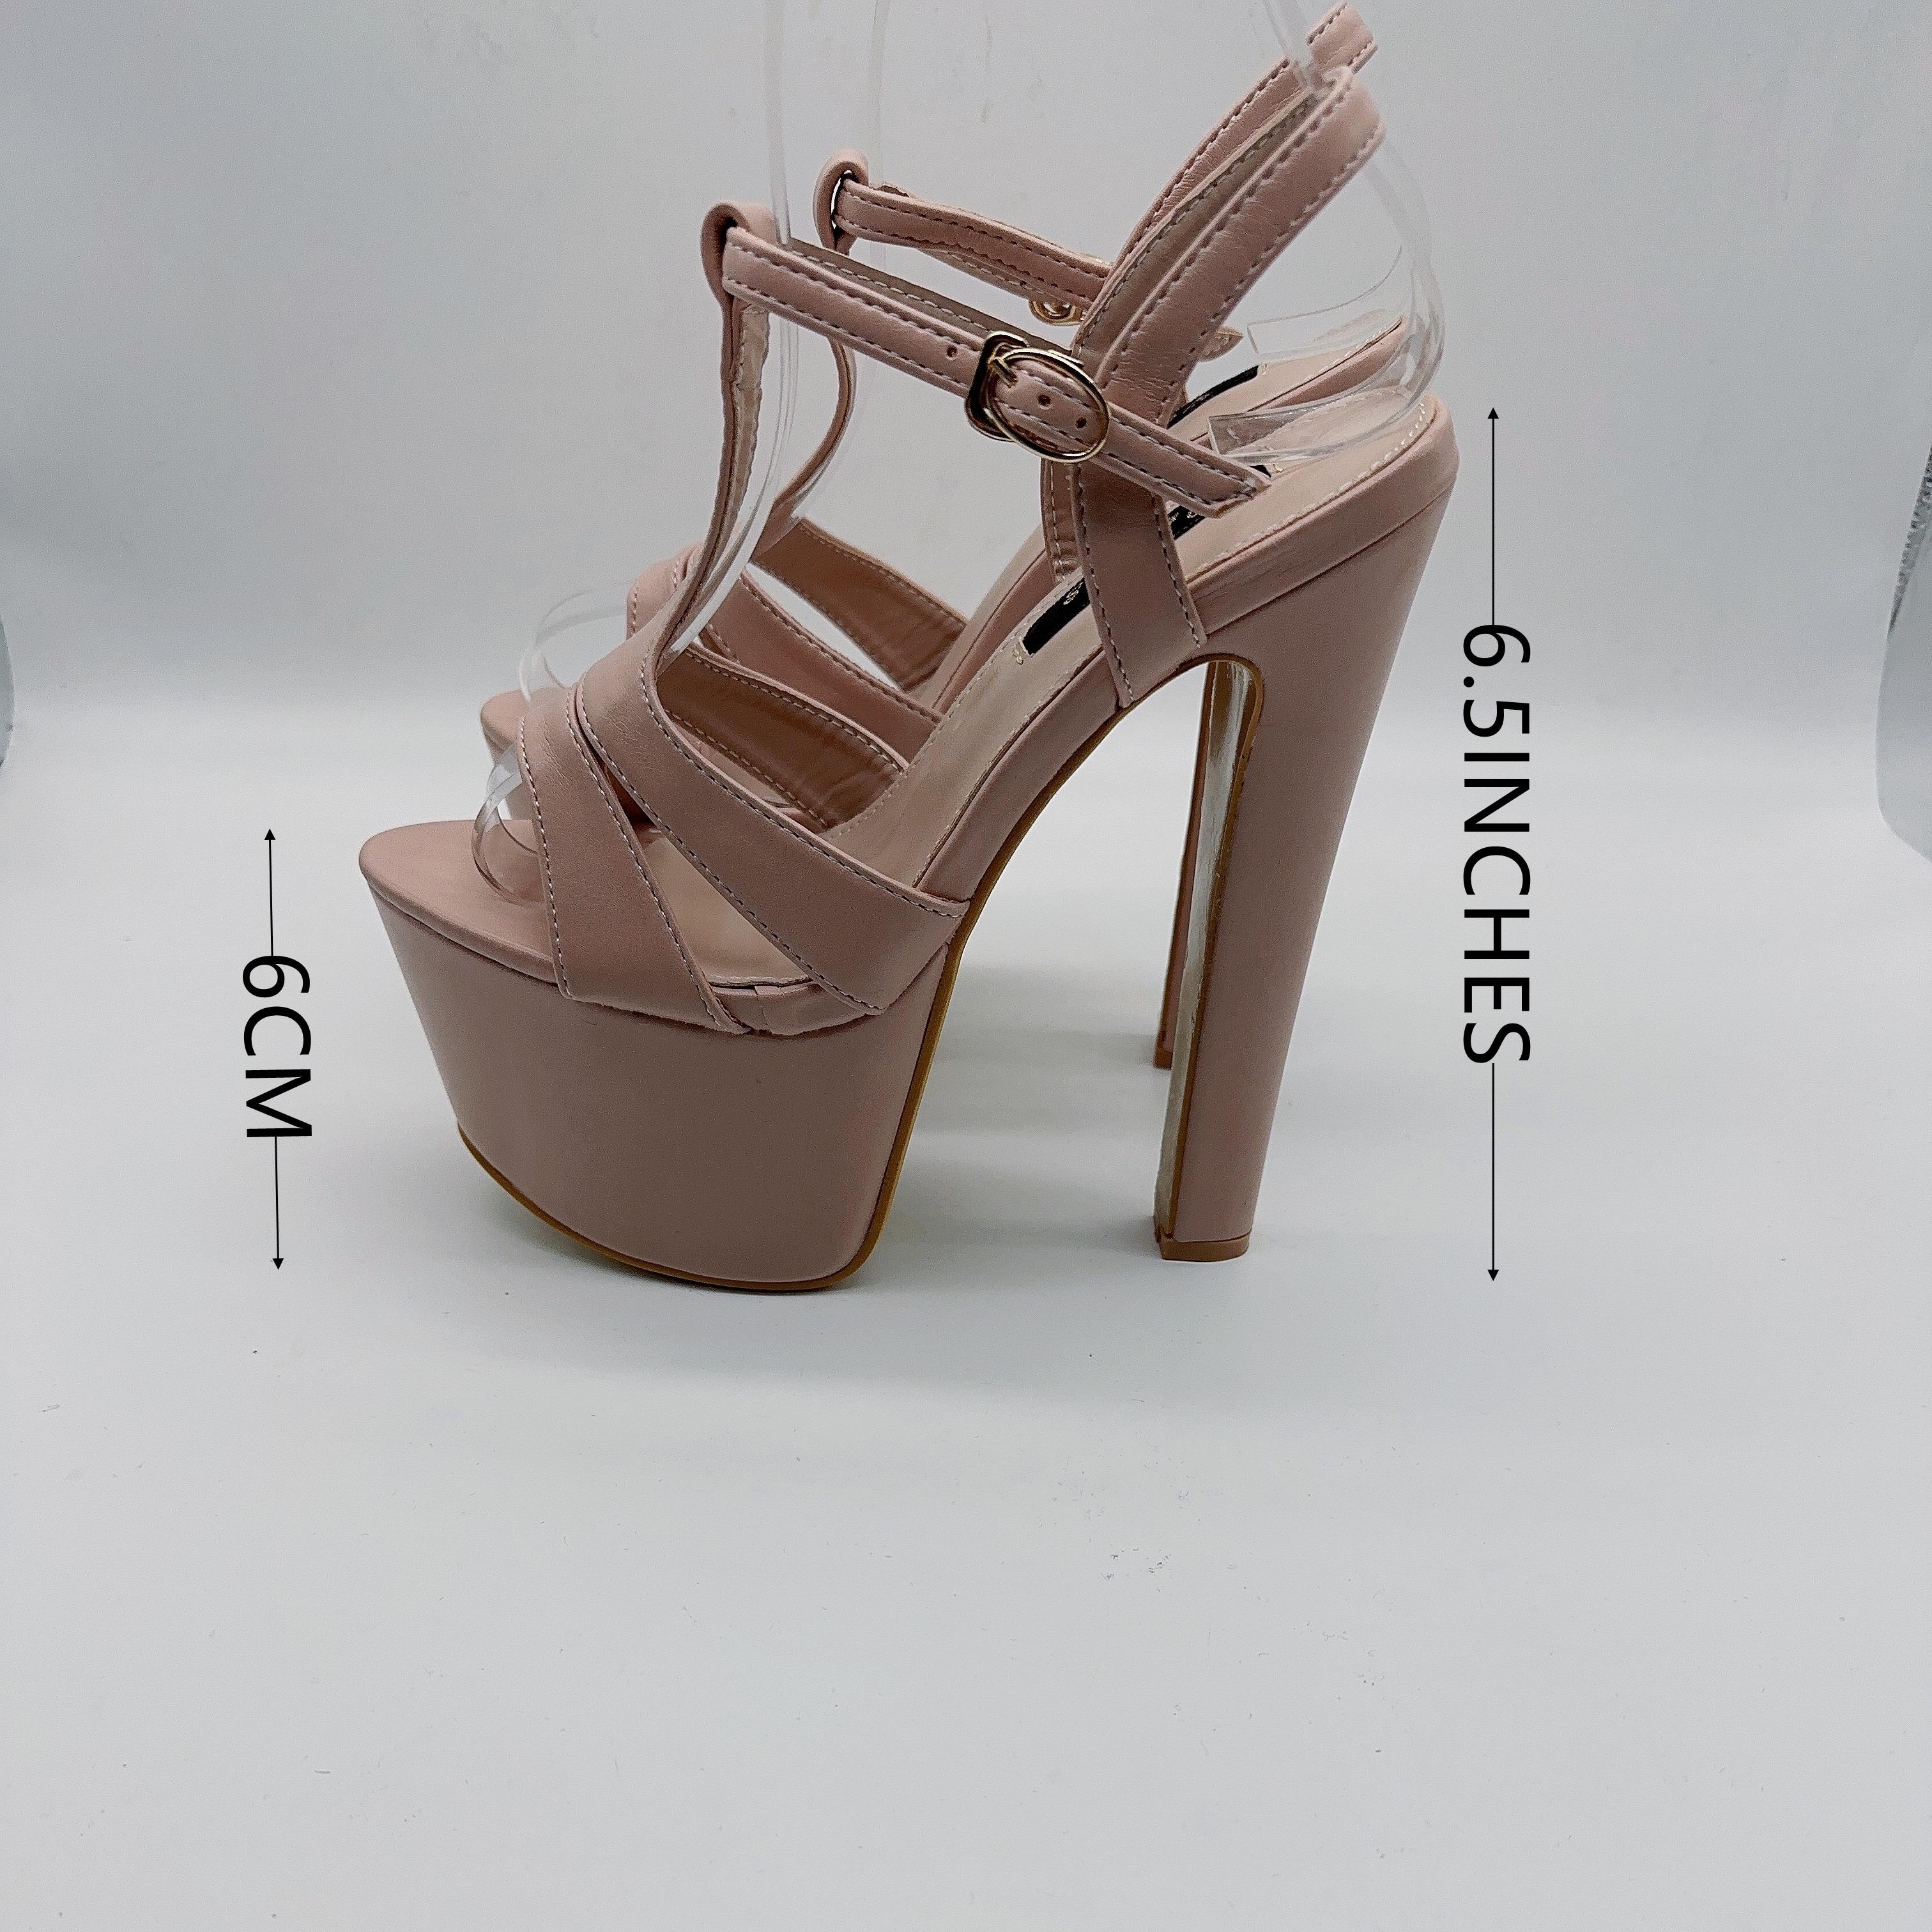 Very high heels in chain sandales sandals fetish by WhatHeels on DeviantArt-hdcinema.vn